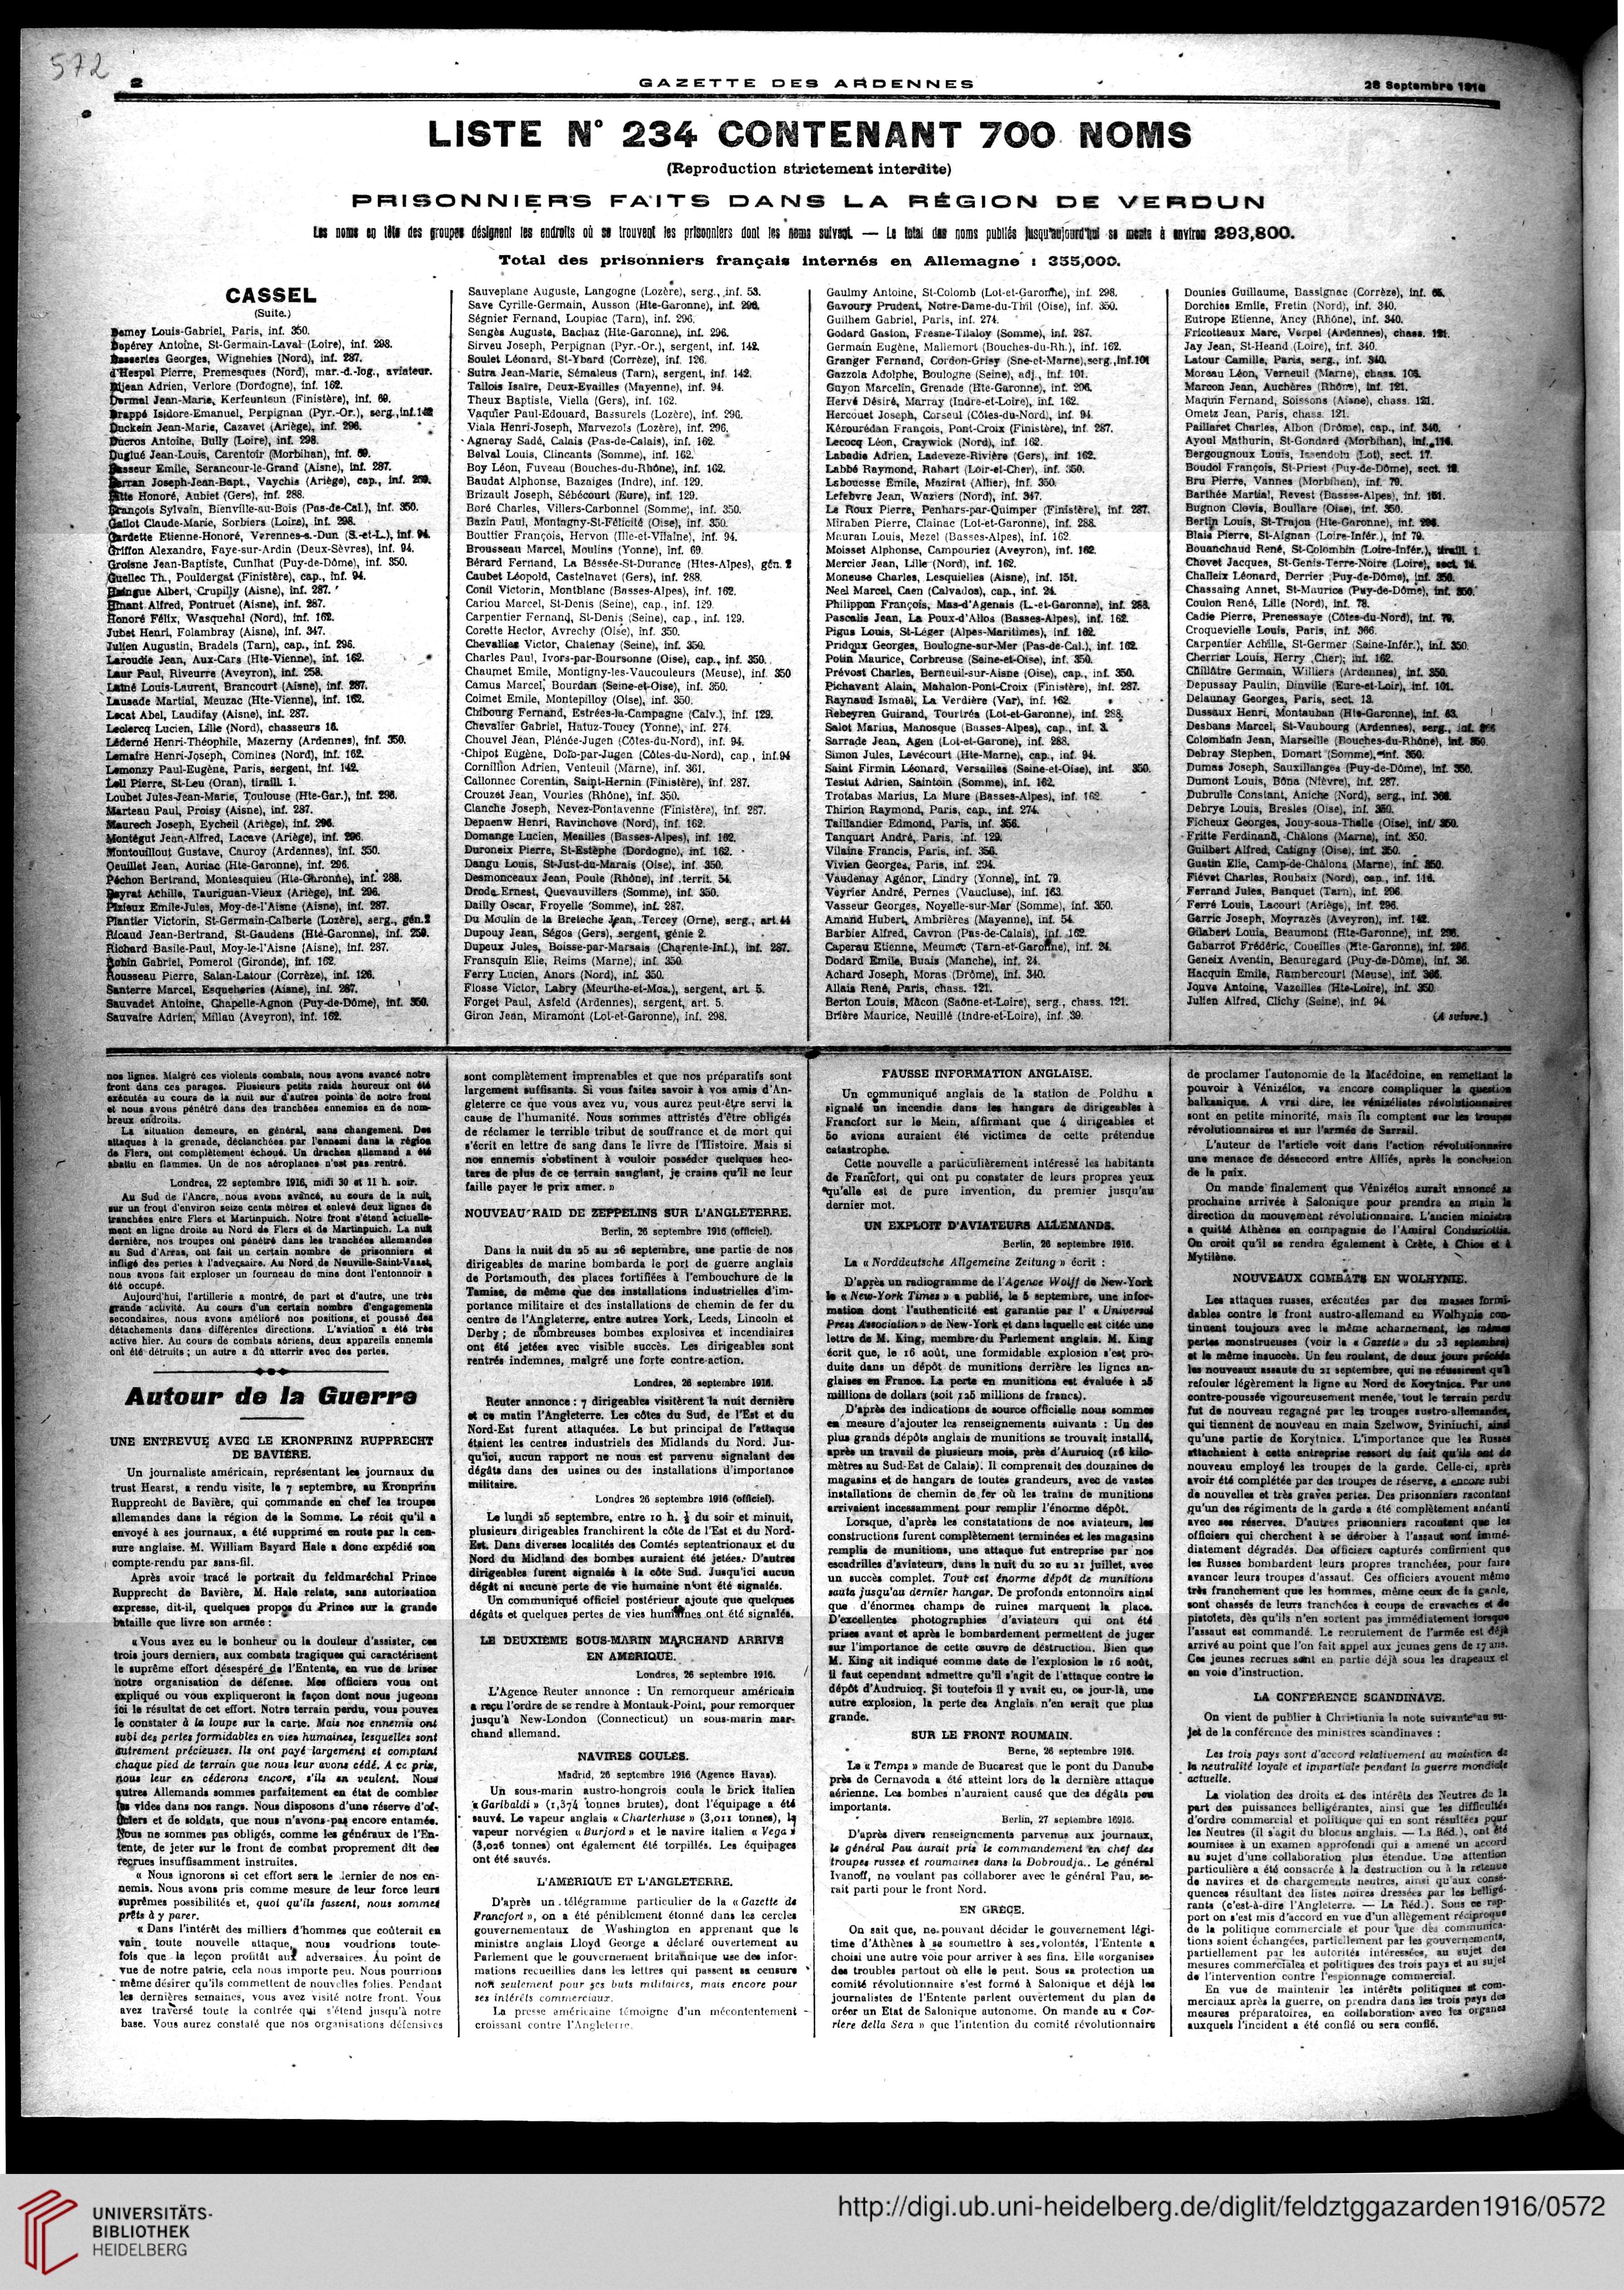 gazette des ardennes journal des pays occupes januar 1916 dezember 1916